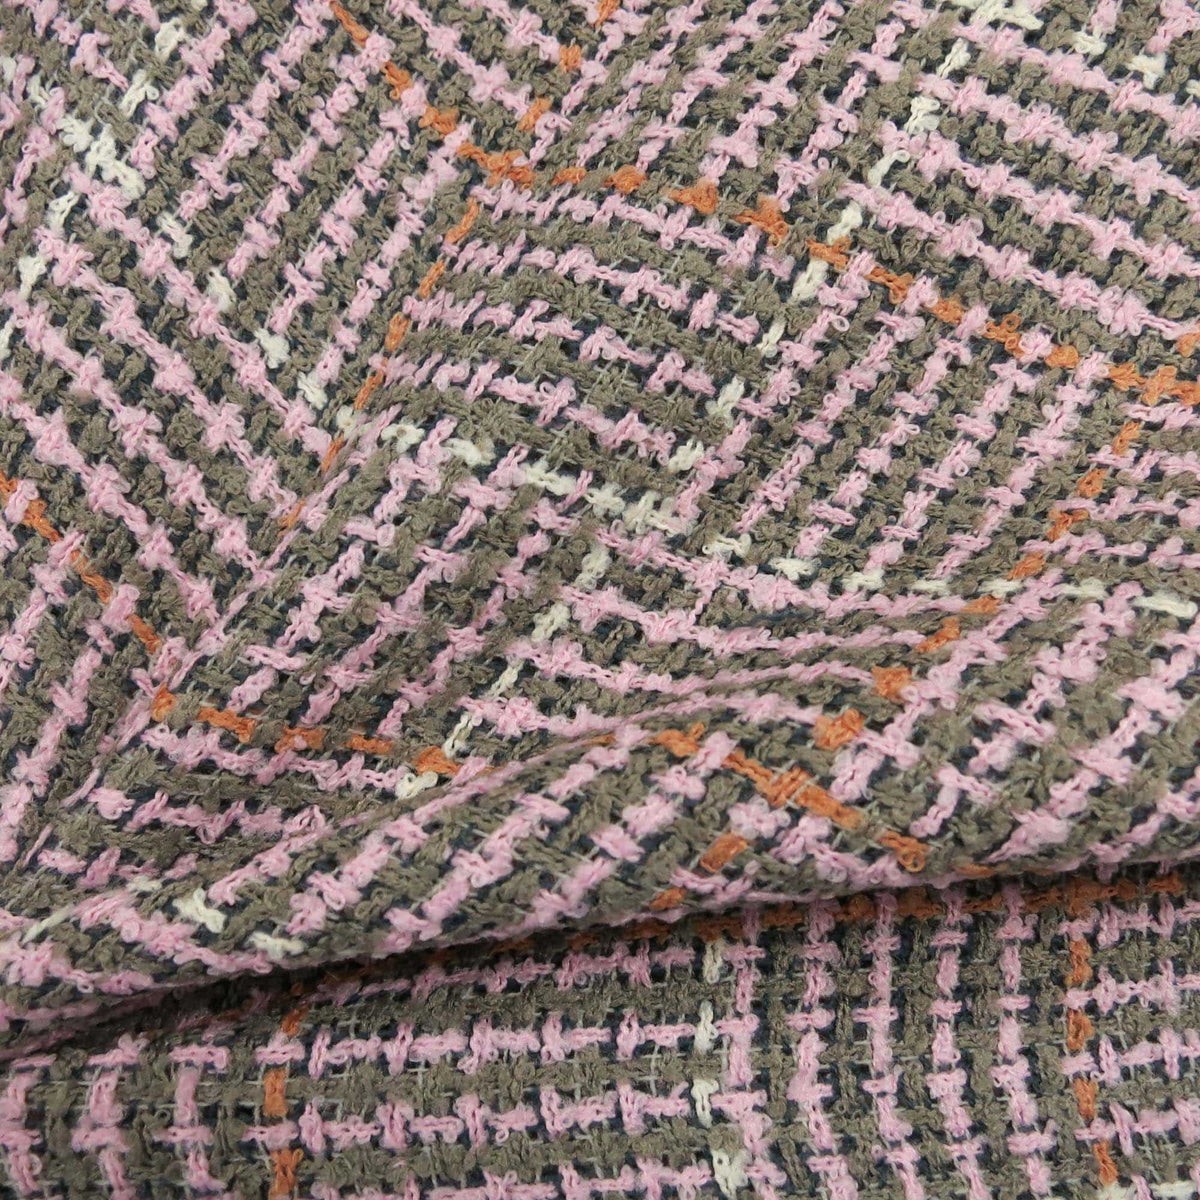 Stretch Cotton Sateen - Taupe - Gala Fabrics